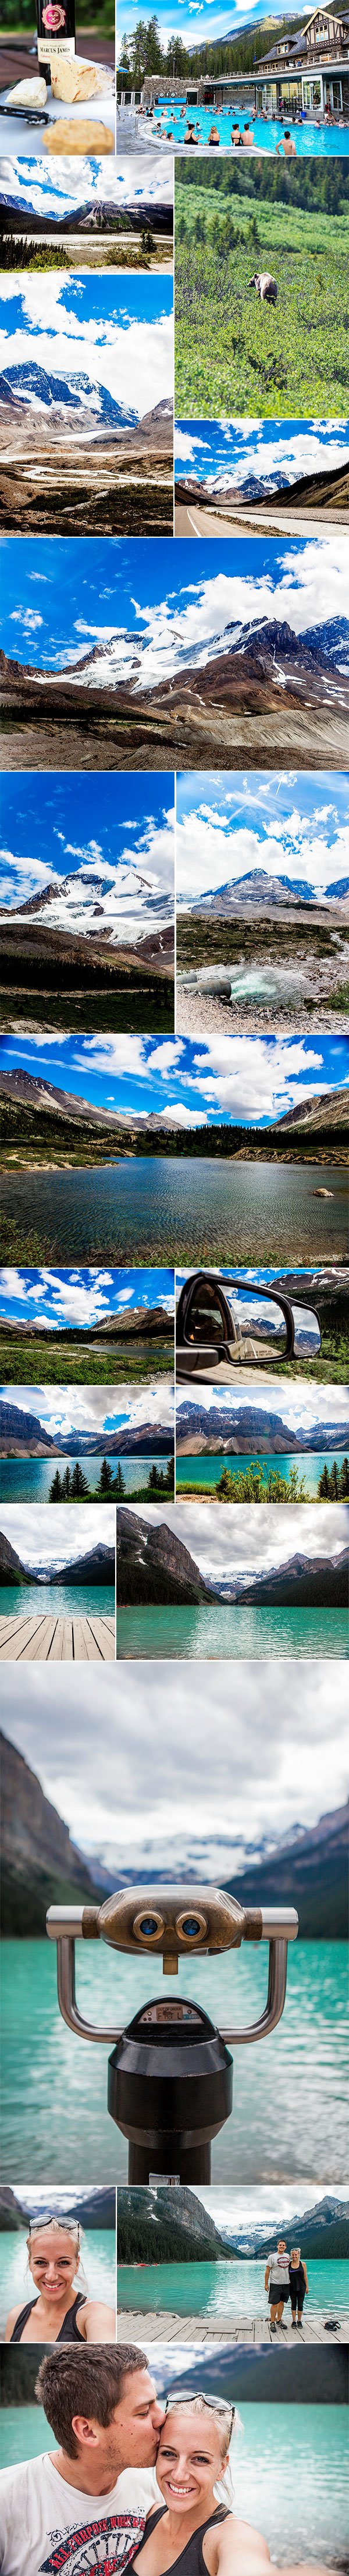 Banff-National-Park-